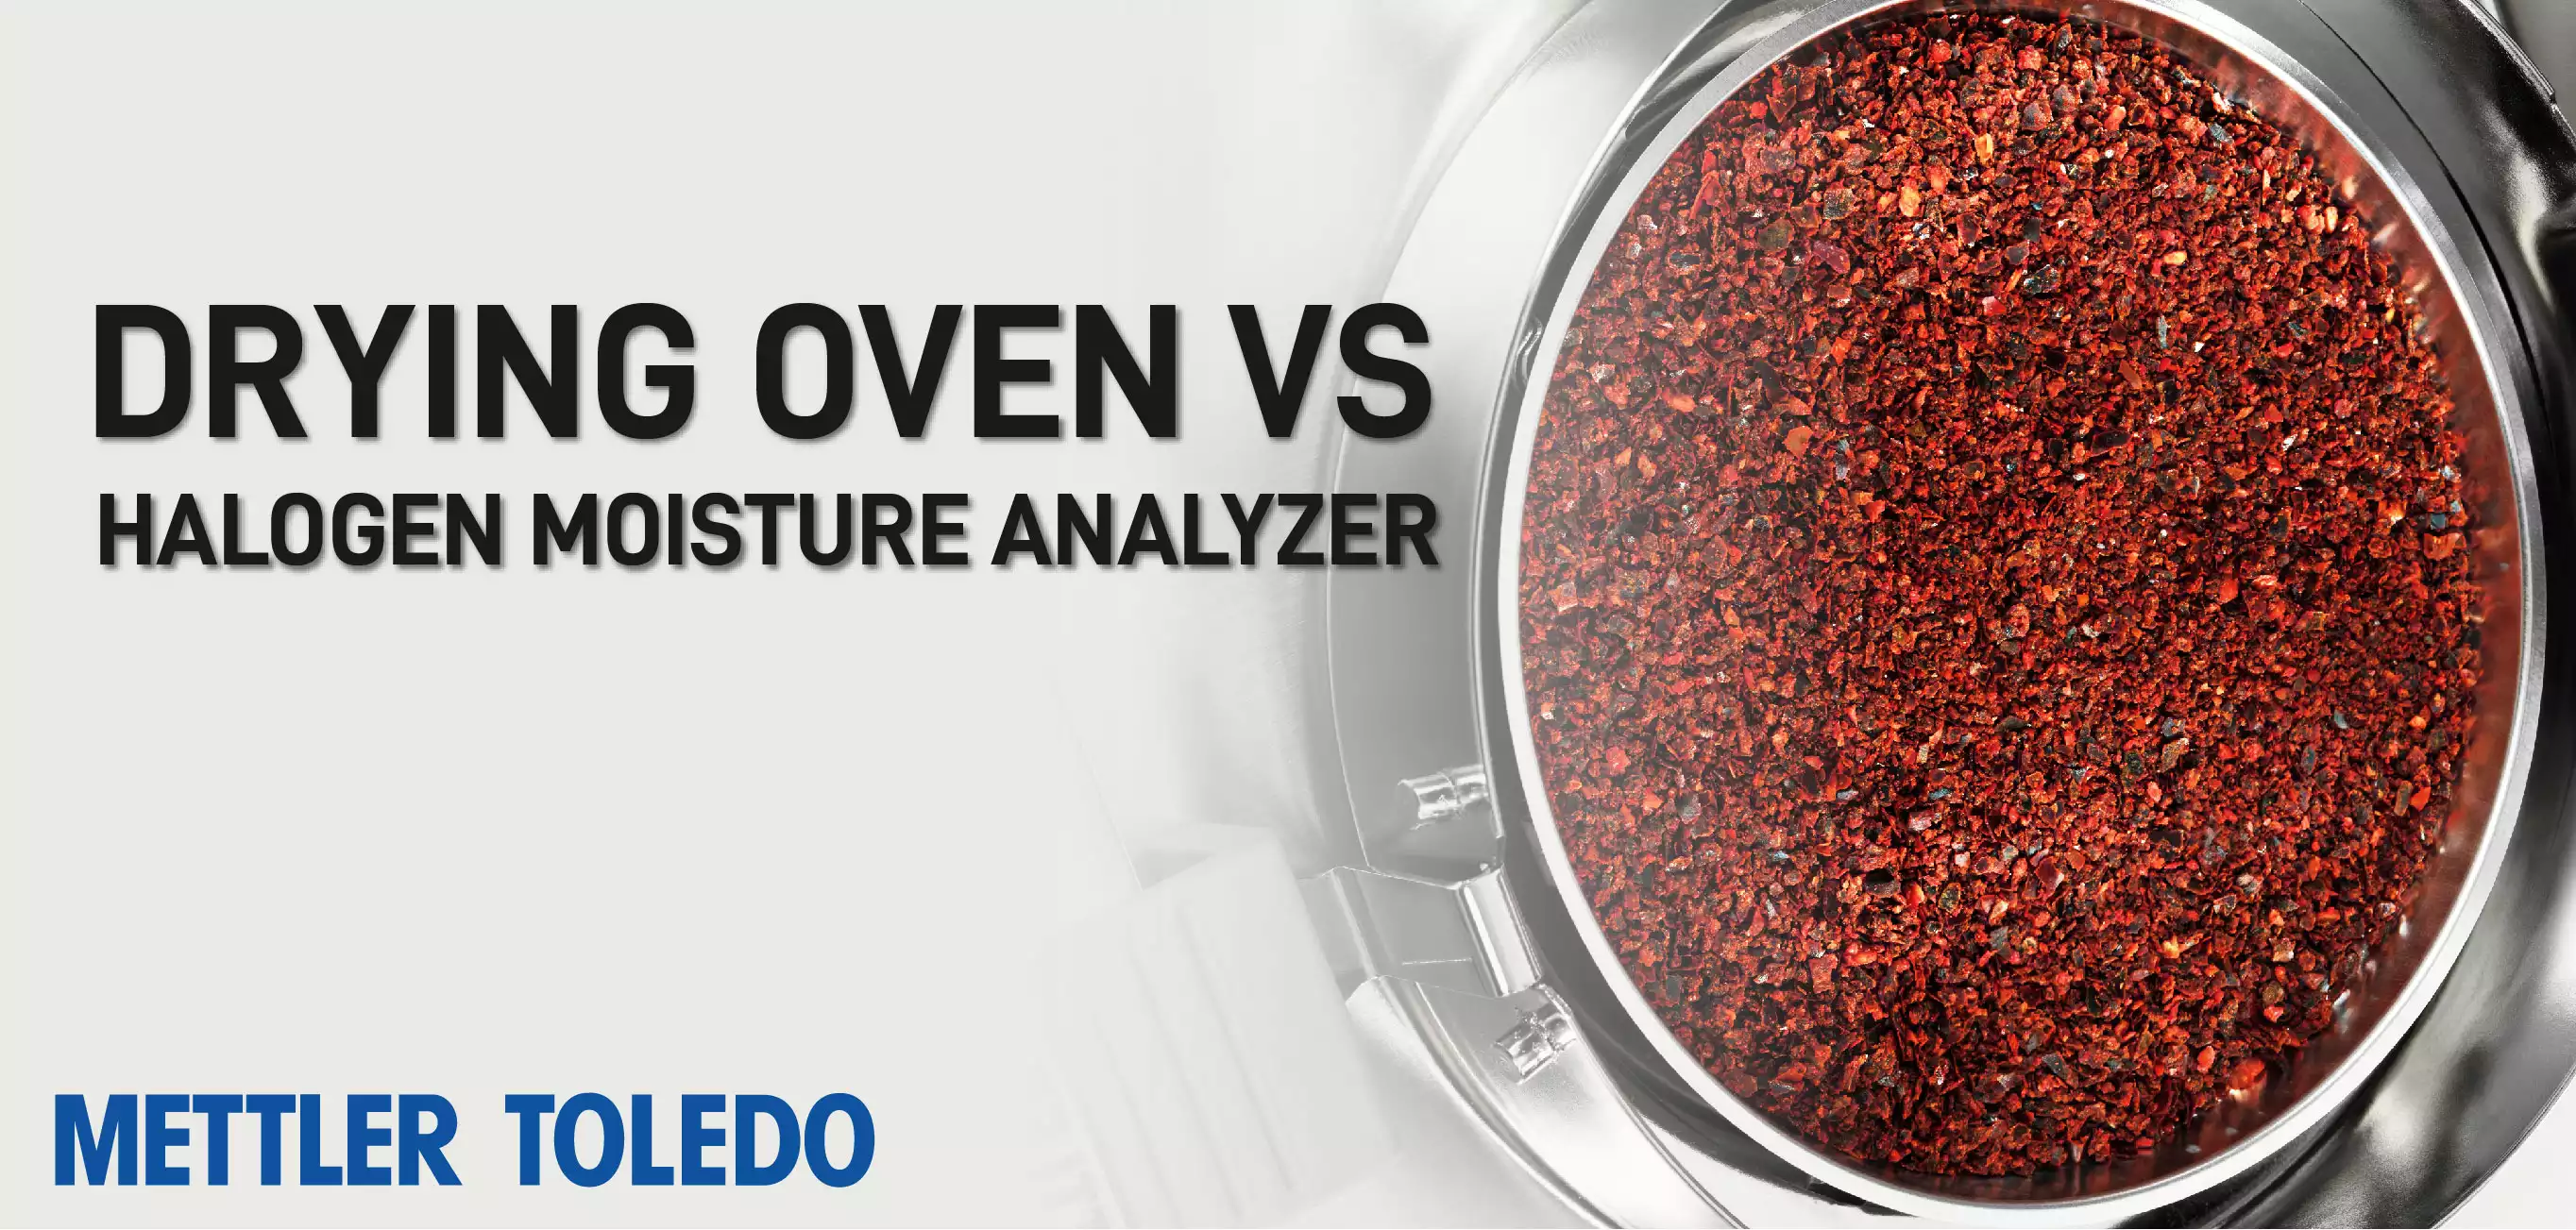 Drying Oven Vs Halogen Moisture Analyzer by METTLER TOLEDO Webinar